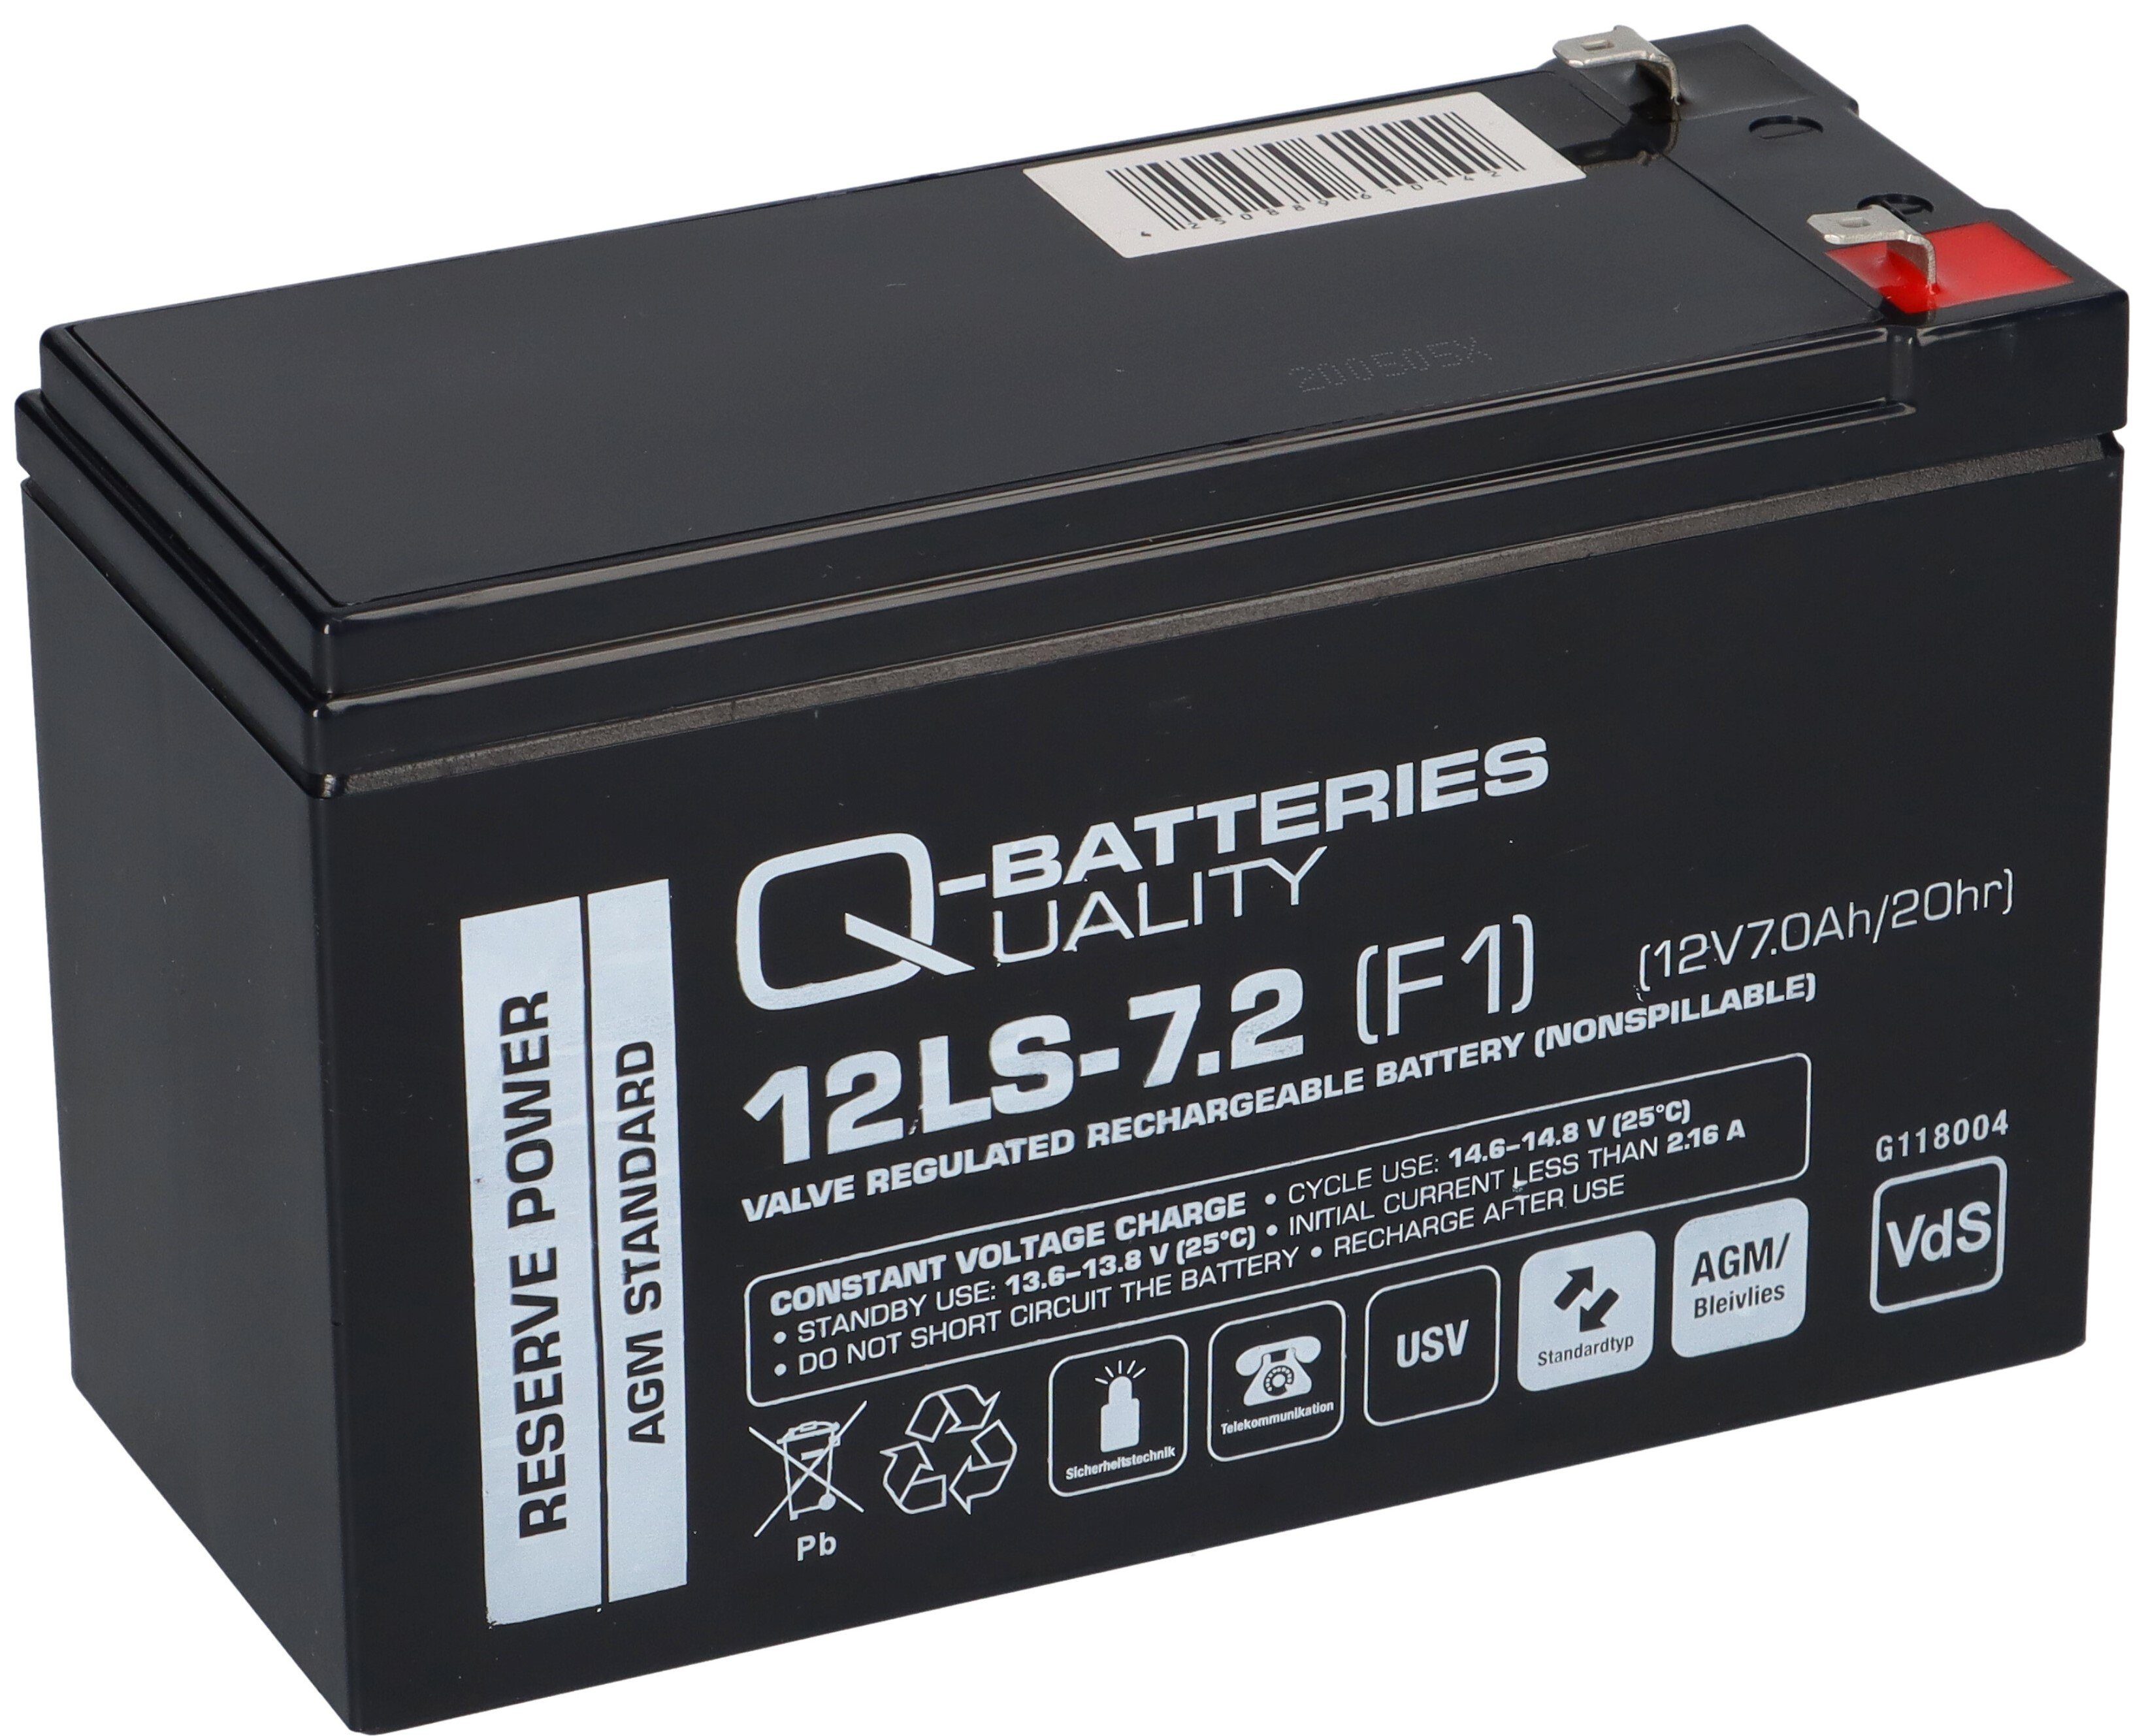 Q-Batteries Q-Batteries 12LS-7.2 F1 12V 7,2Ah Blei-Vlies-Akku / AGM VRLA mit VdS Bleiakkus